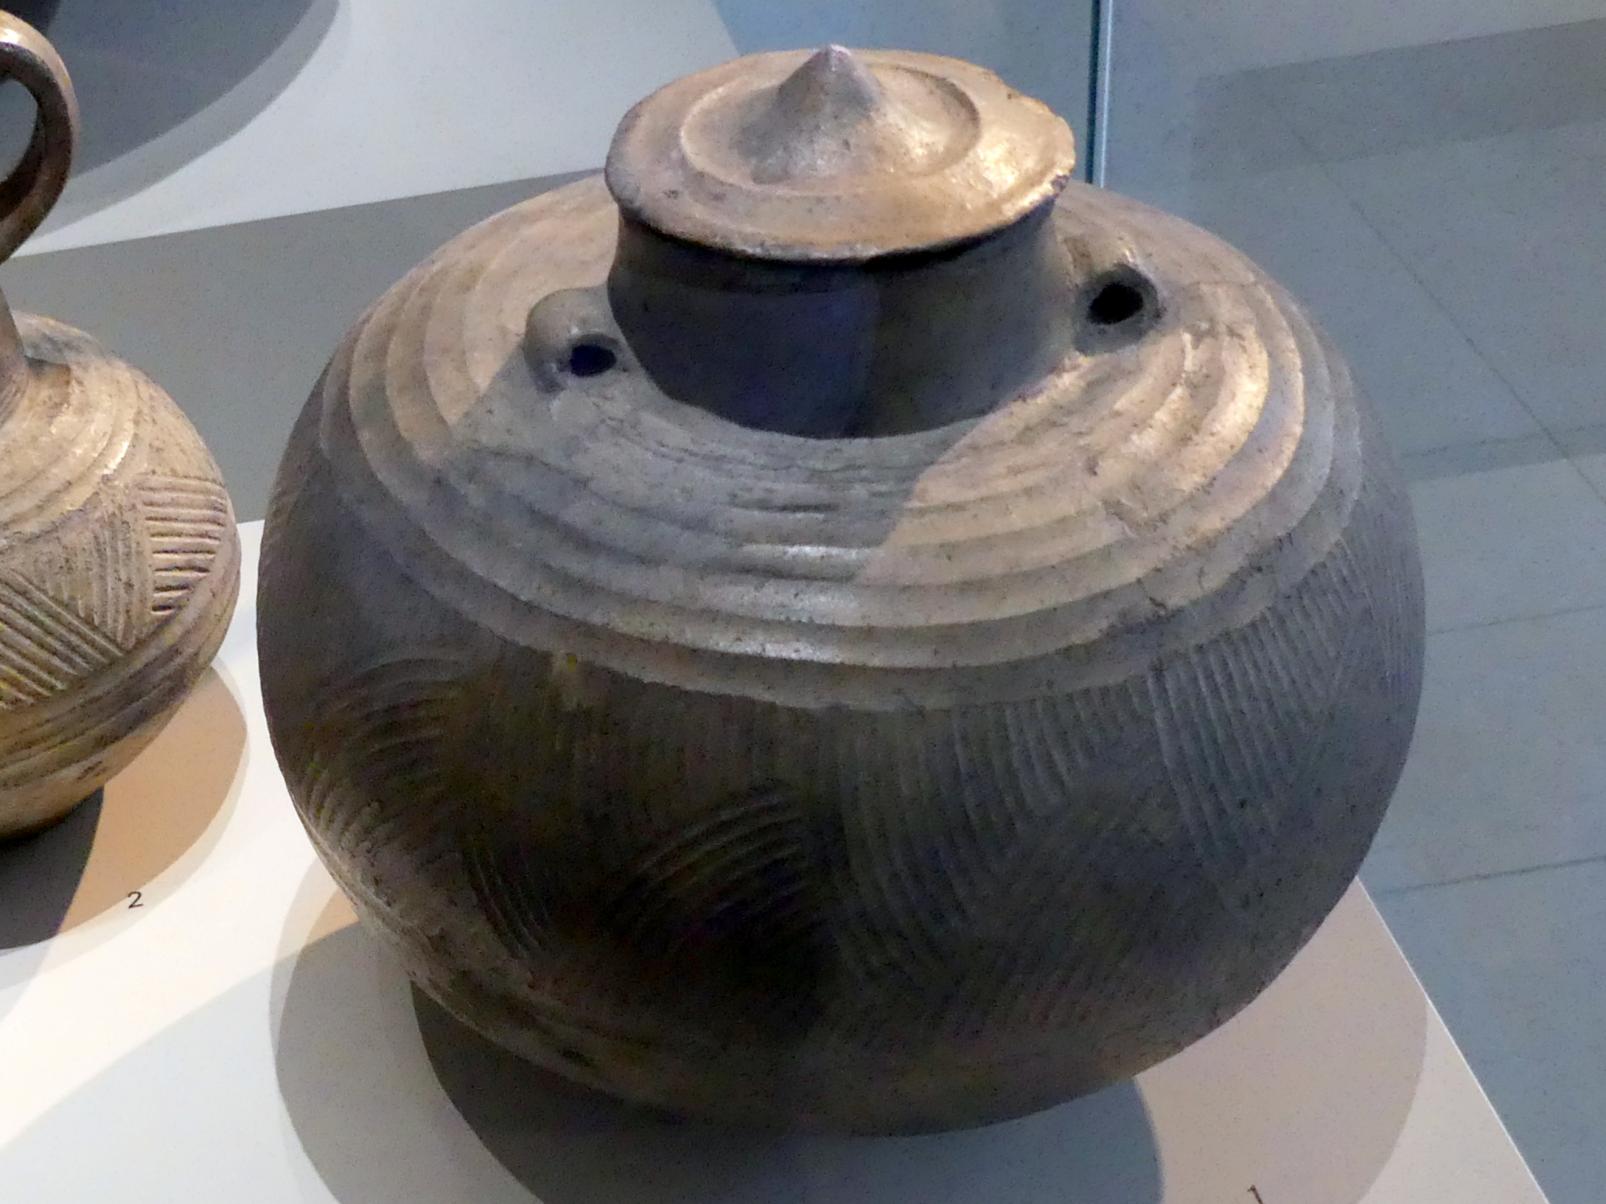 Topf mit Deckel, 900 - 600 v. Chr., Bild 1/2